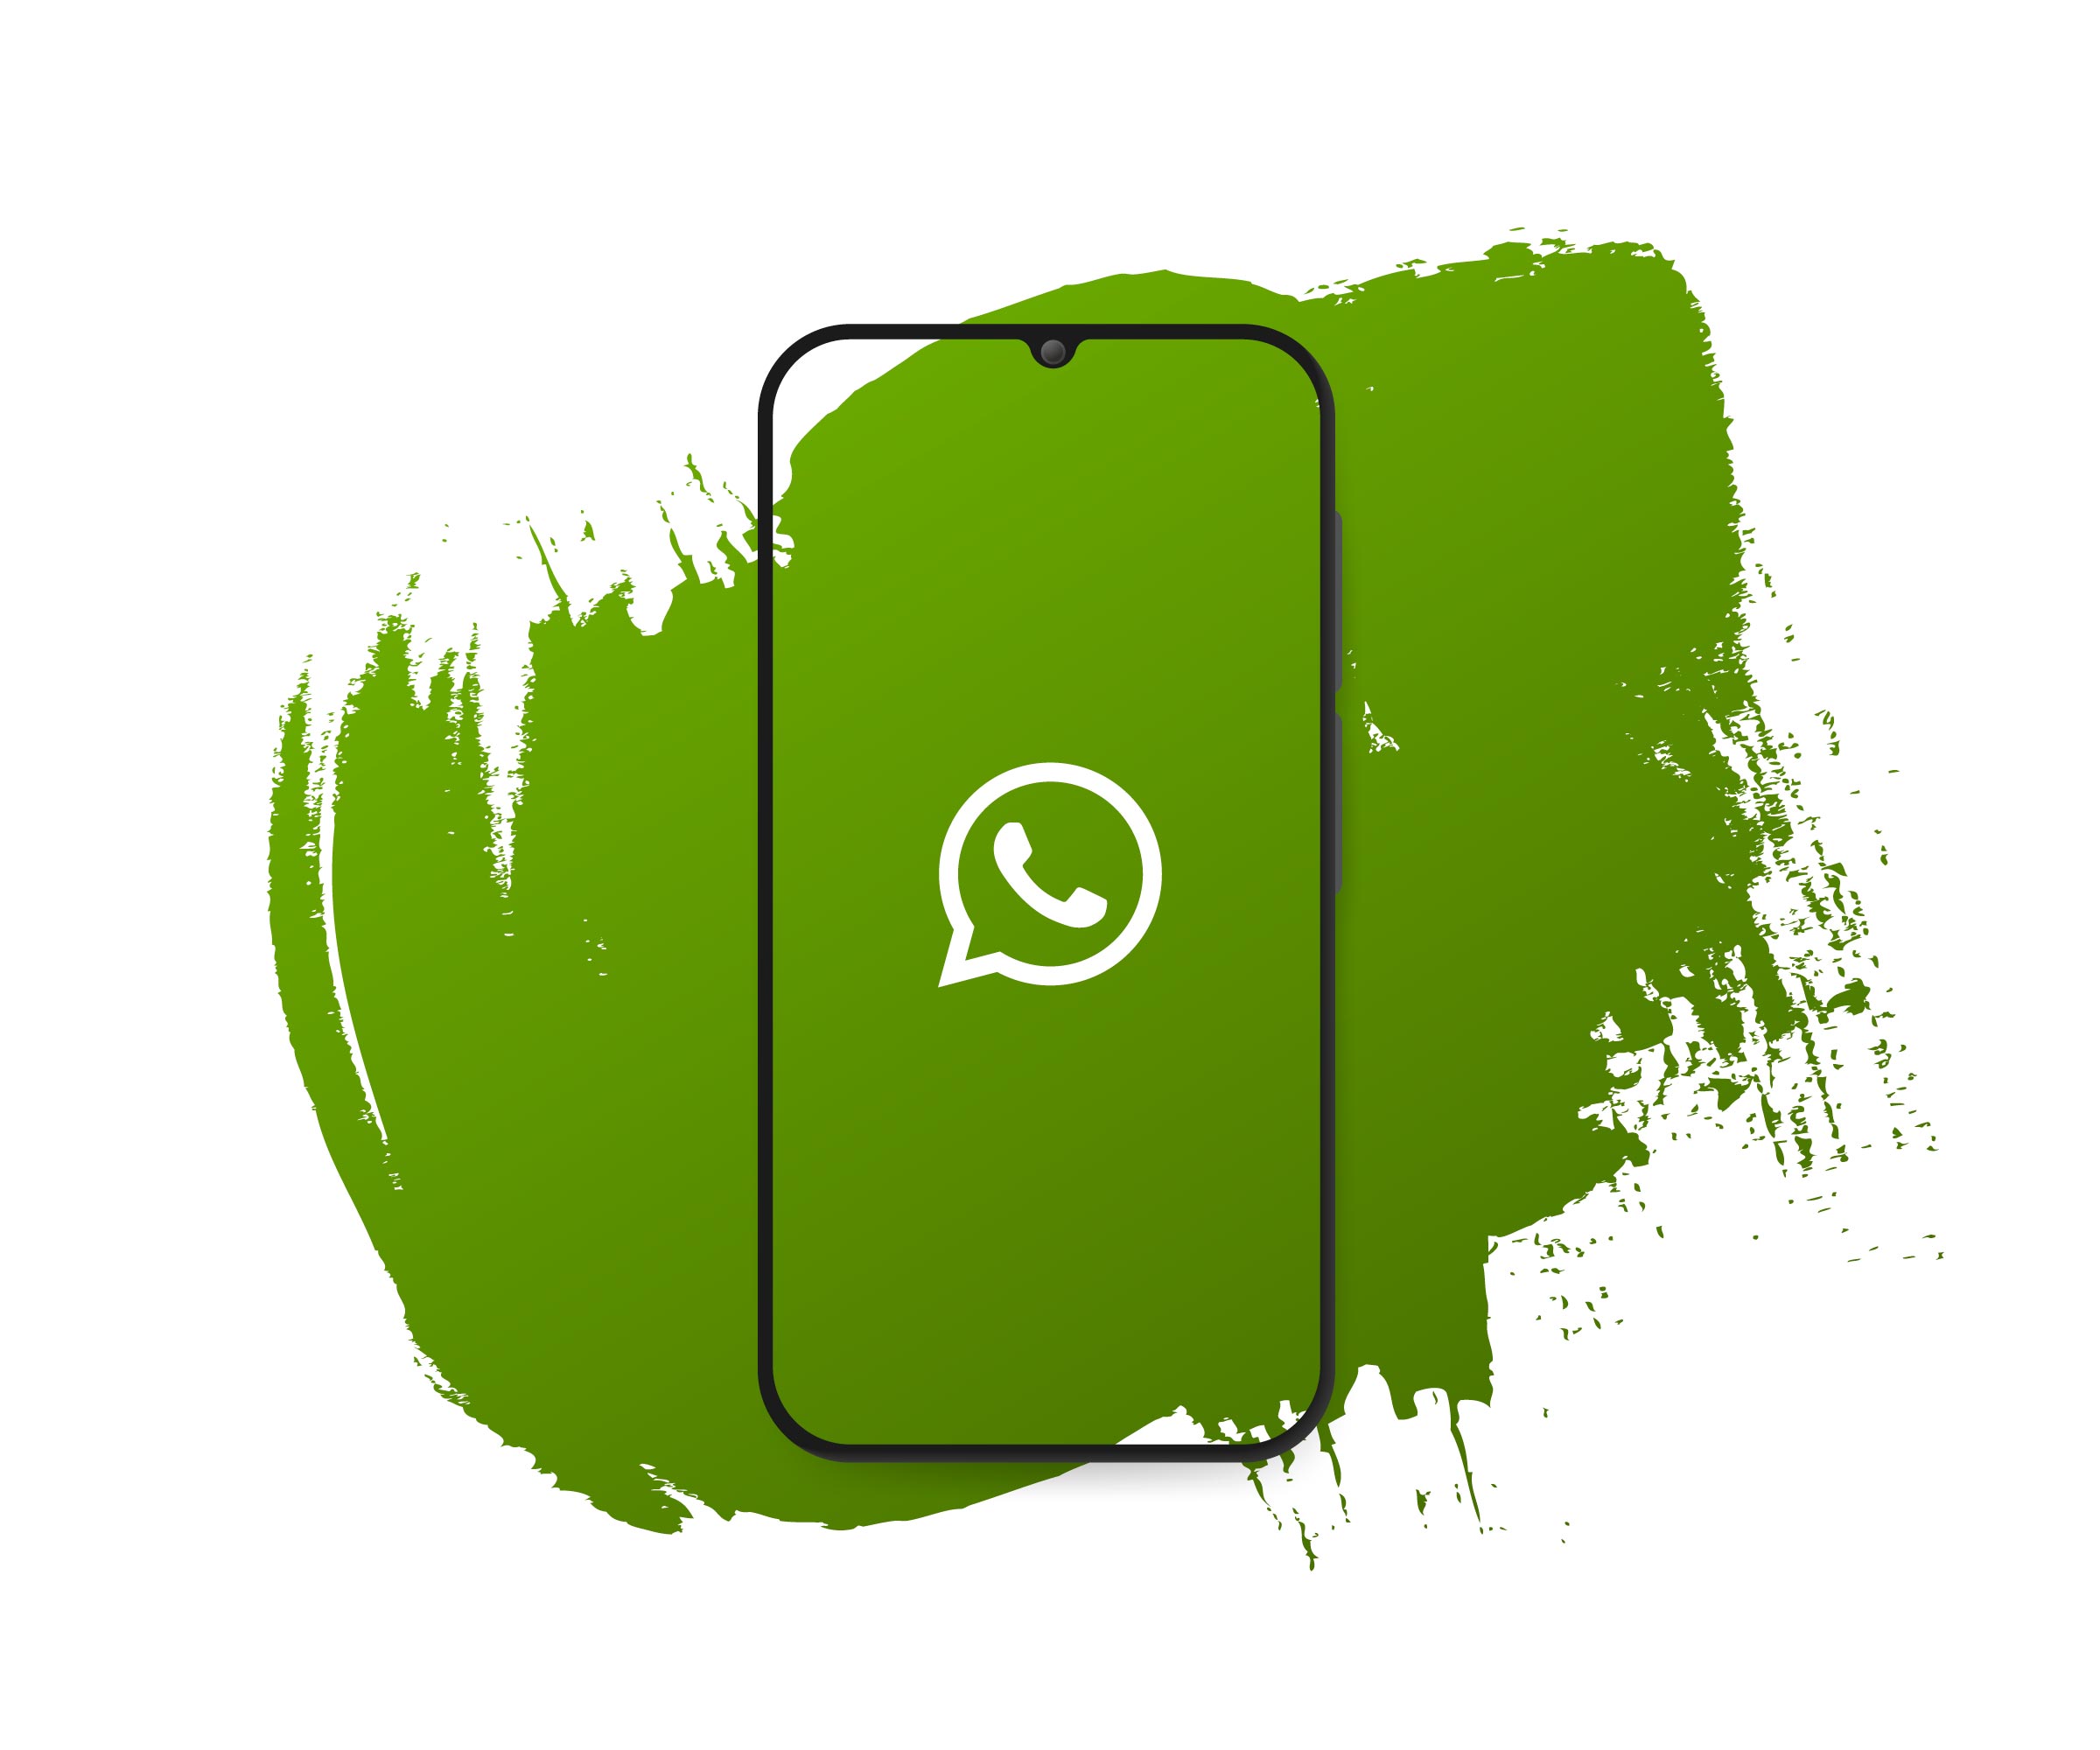 WhatsApp Screen Share Feature